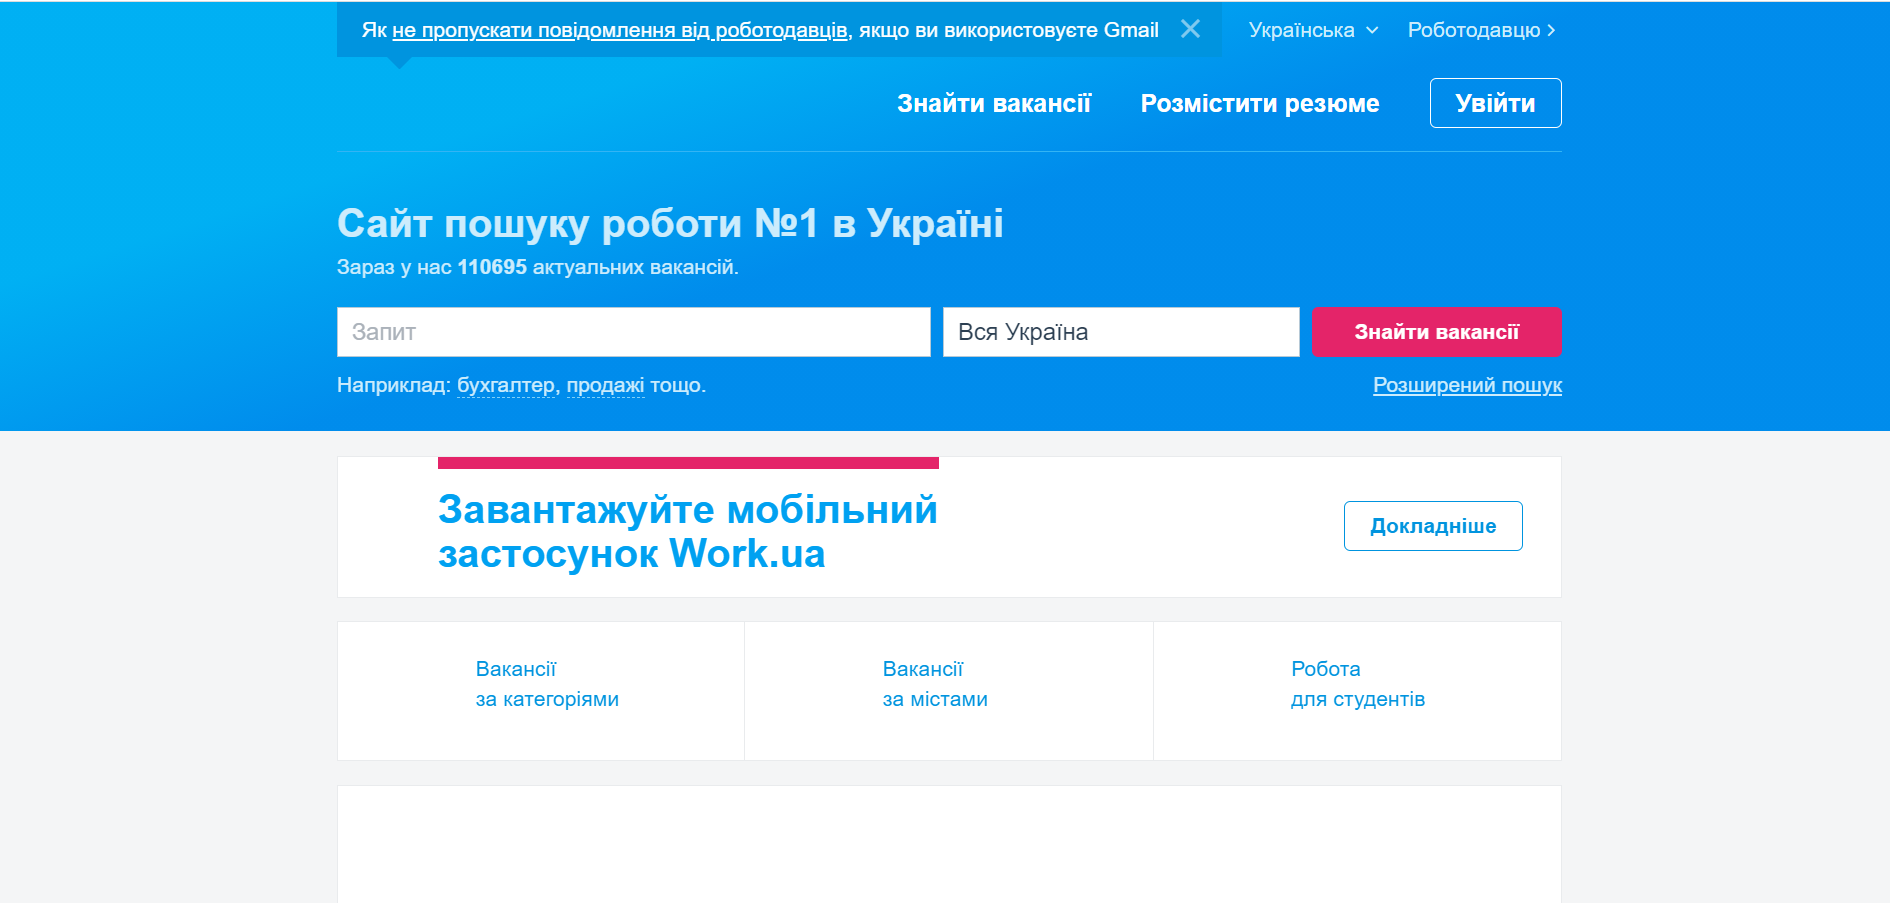 WORK.ua сервис для поиска работы в IT